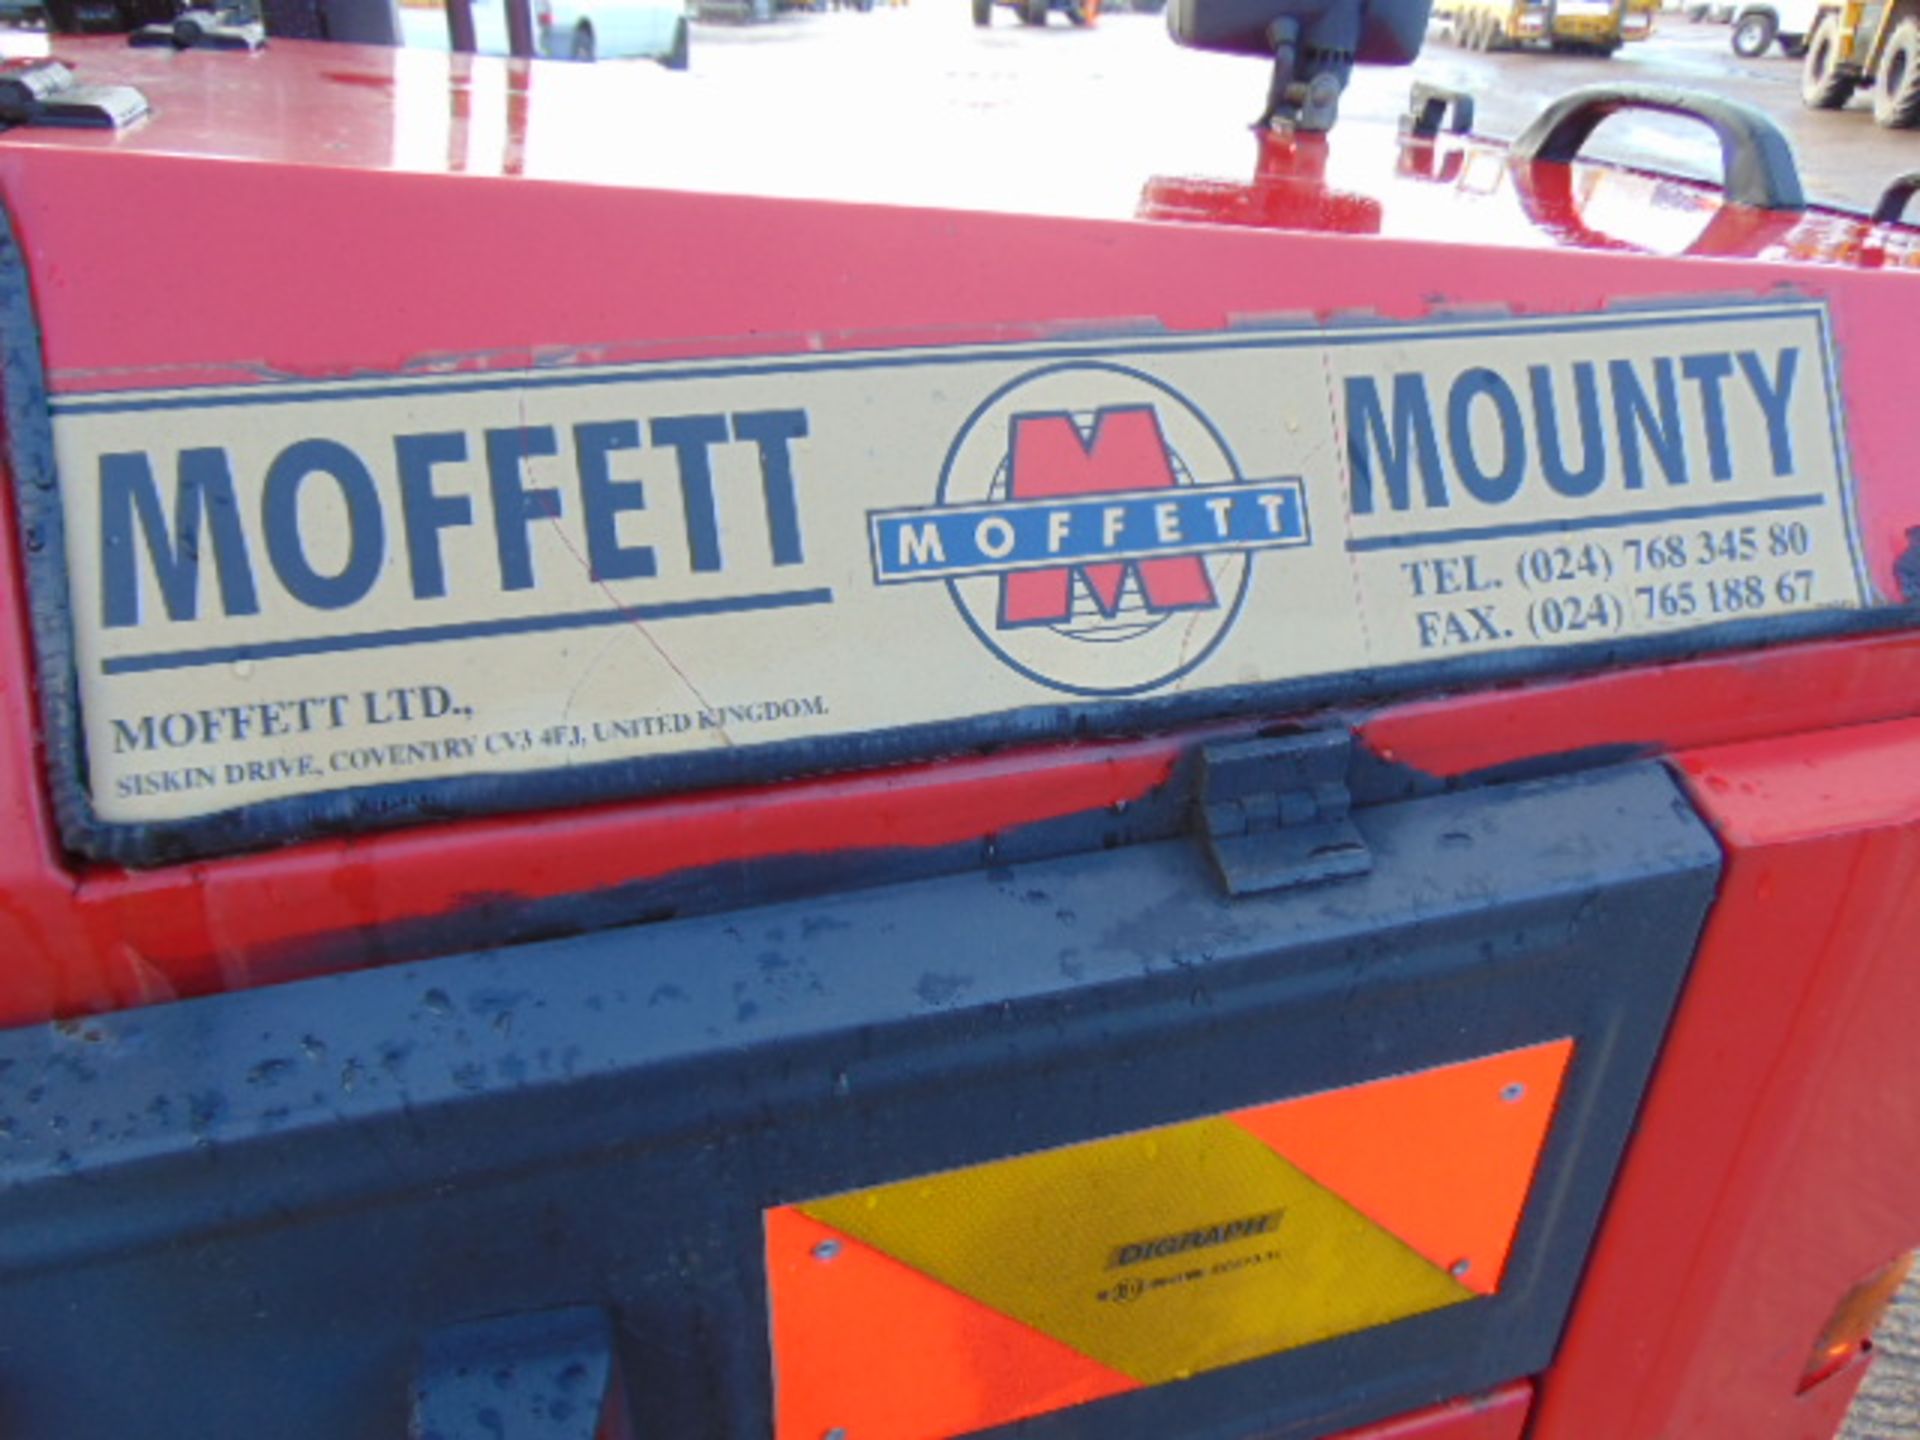 2003 Moffett Mounty M2003 Truck Mounted Forklift - Image 21 of 25